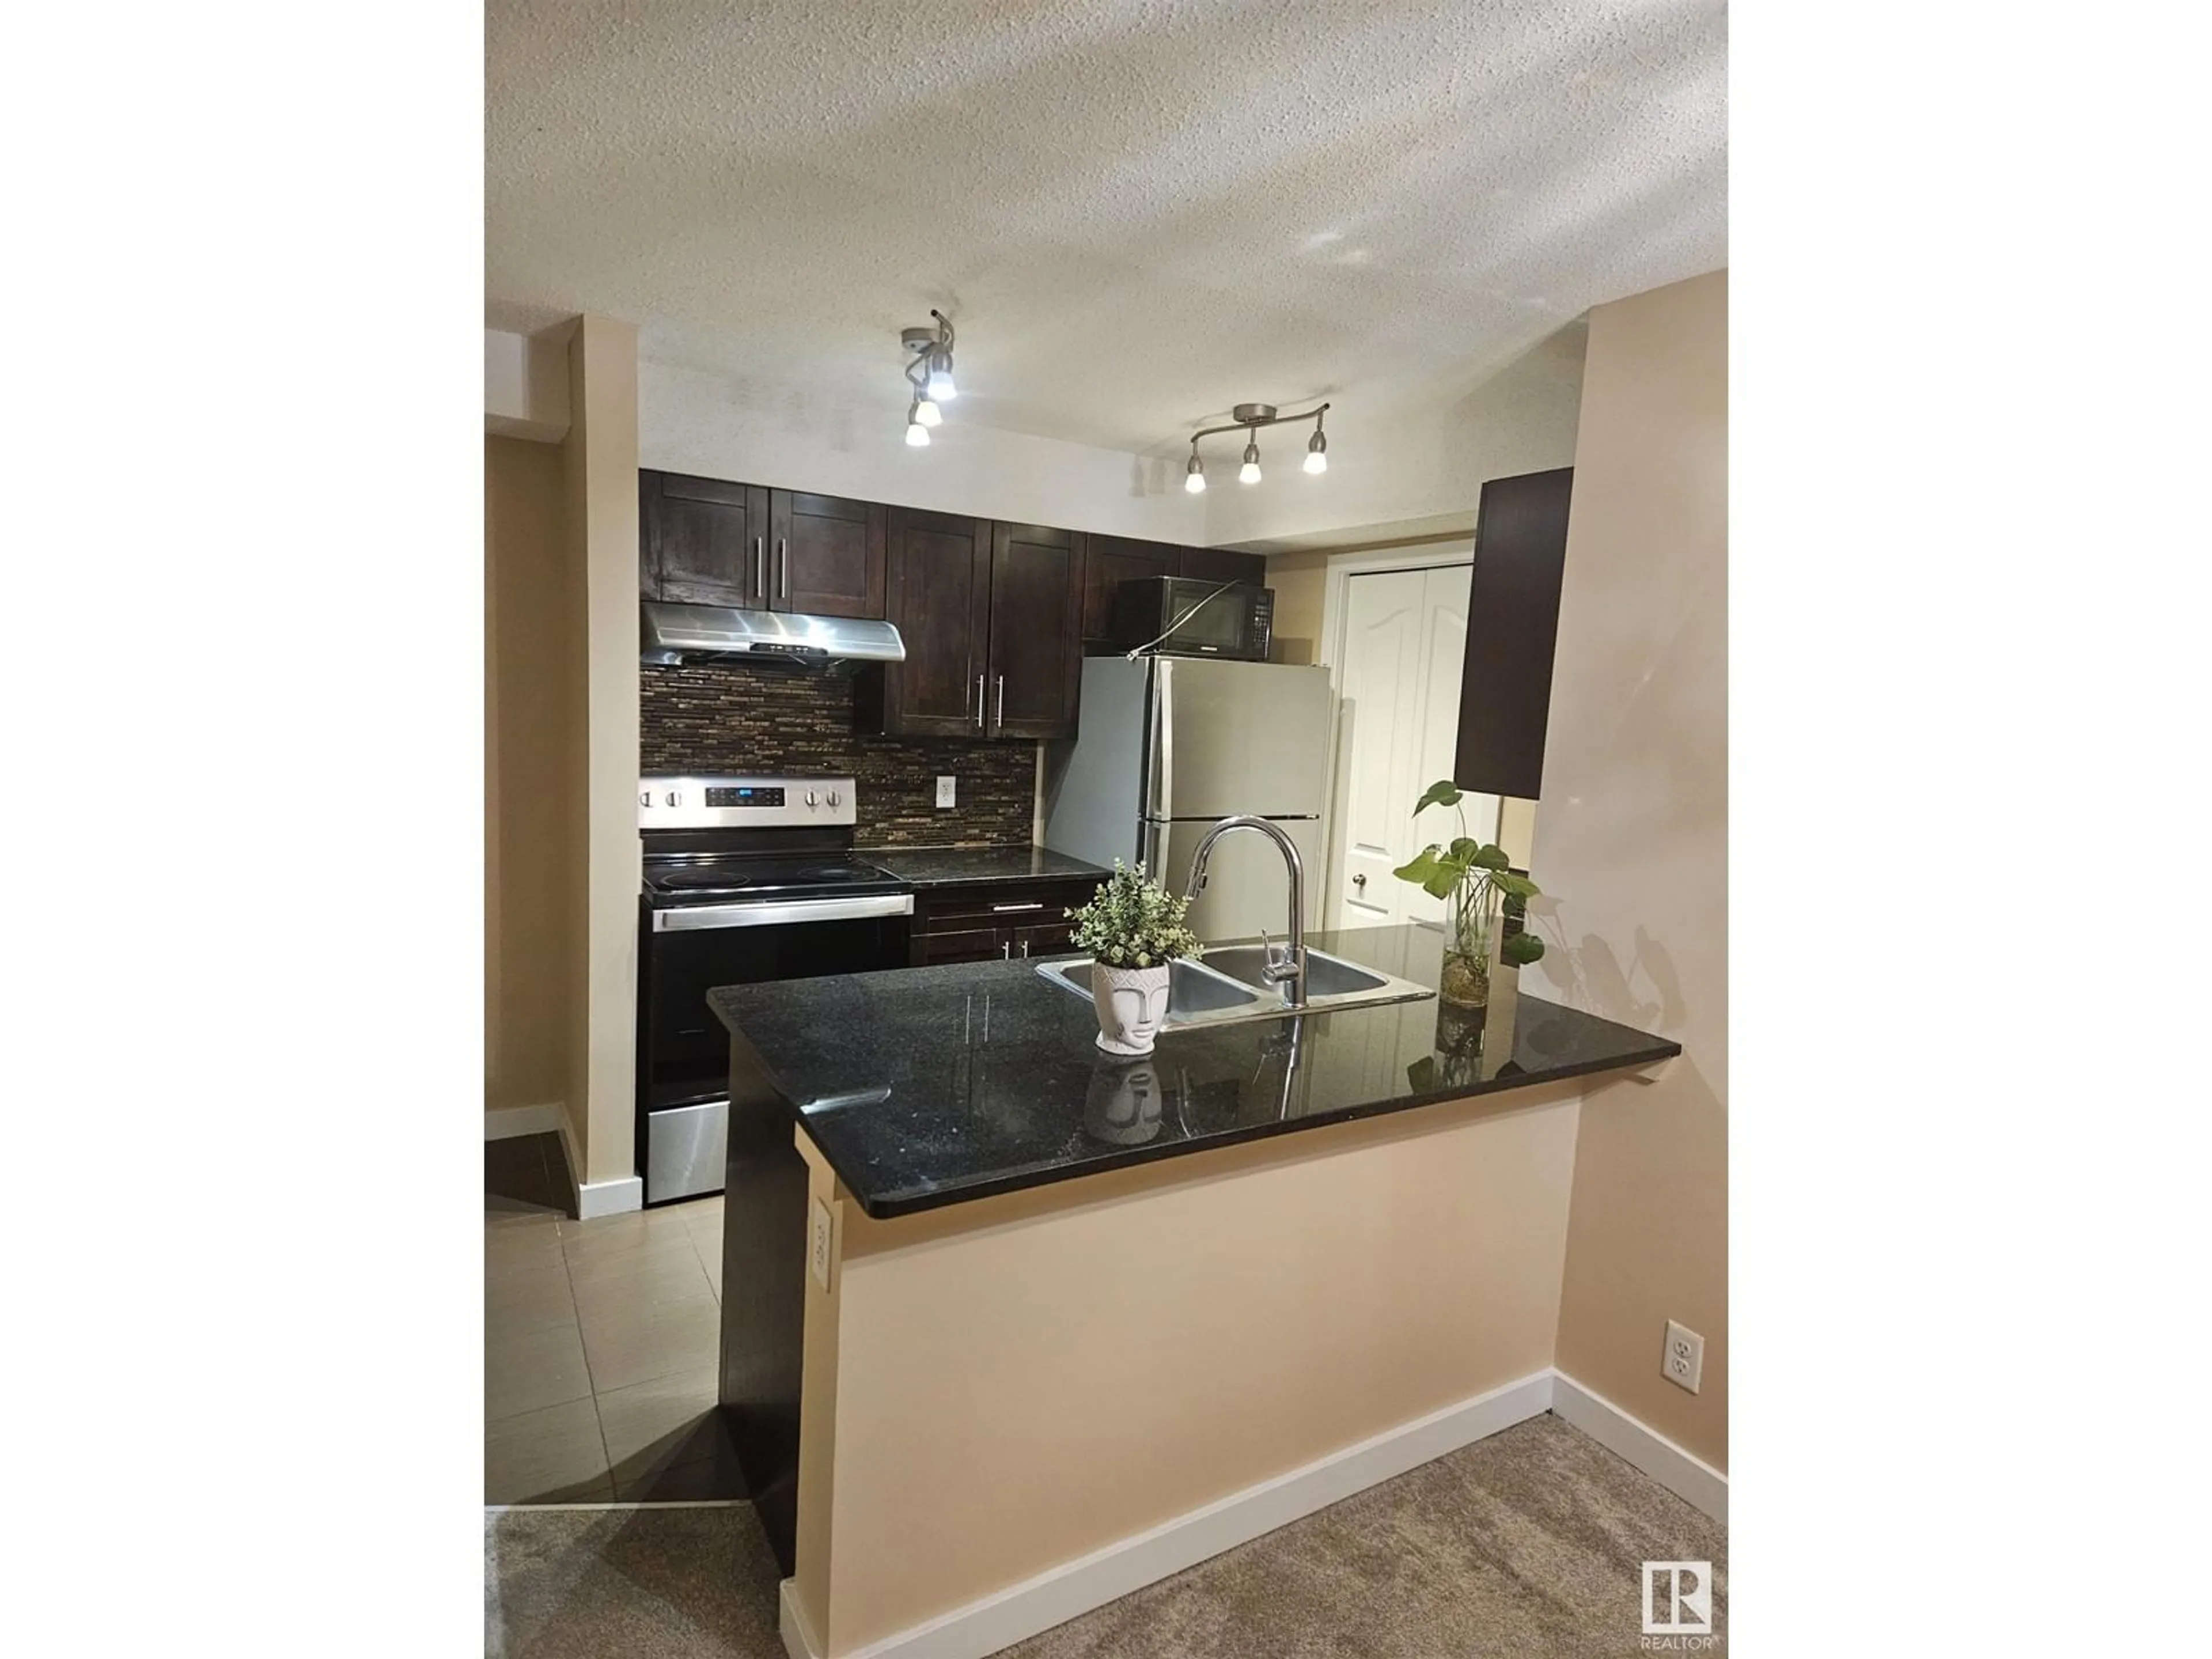 Standard kitchen for #406 534 WATT BV SW, Edmonton Alberta T6X1P7